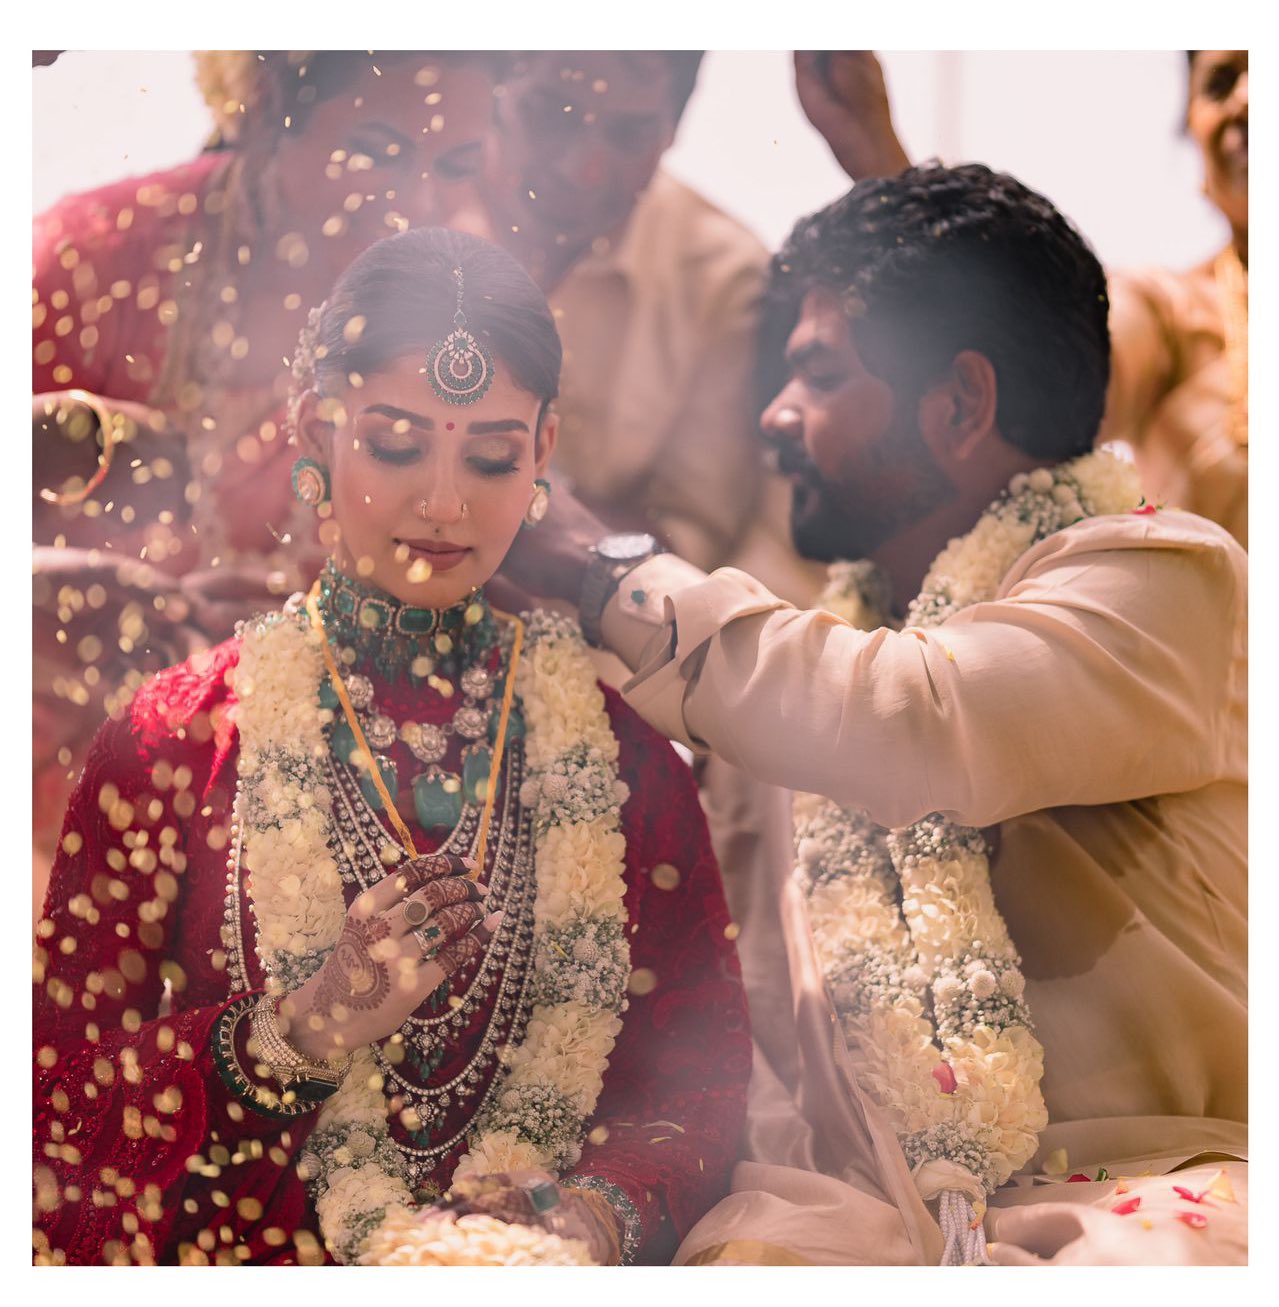 Vignesh shivan released marriage photos on social media platform